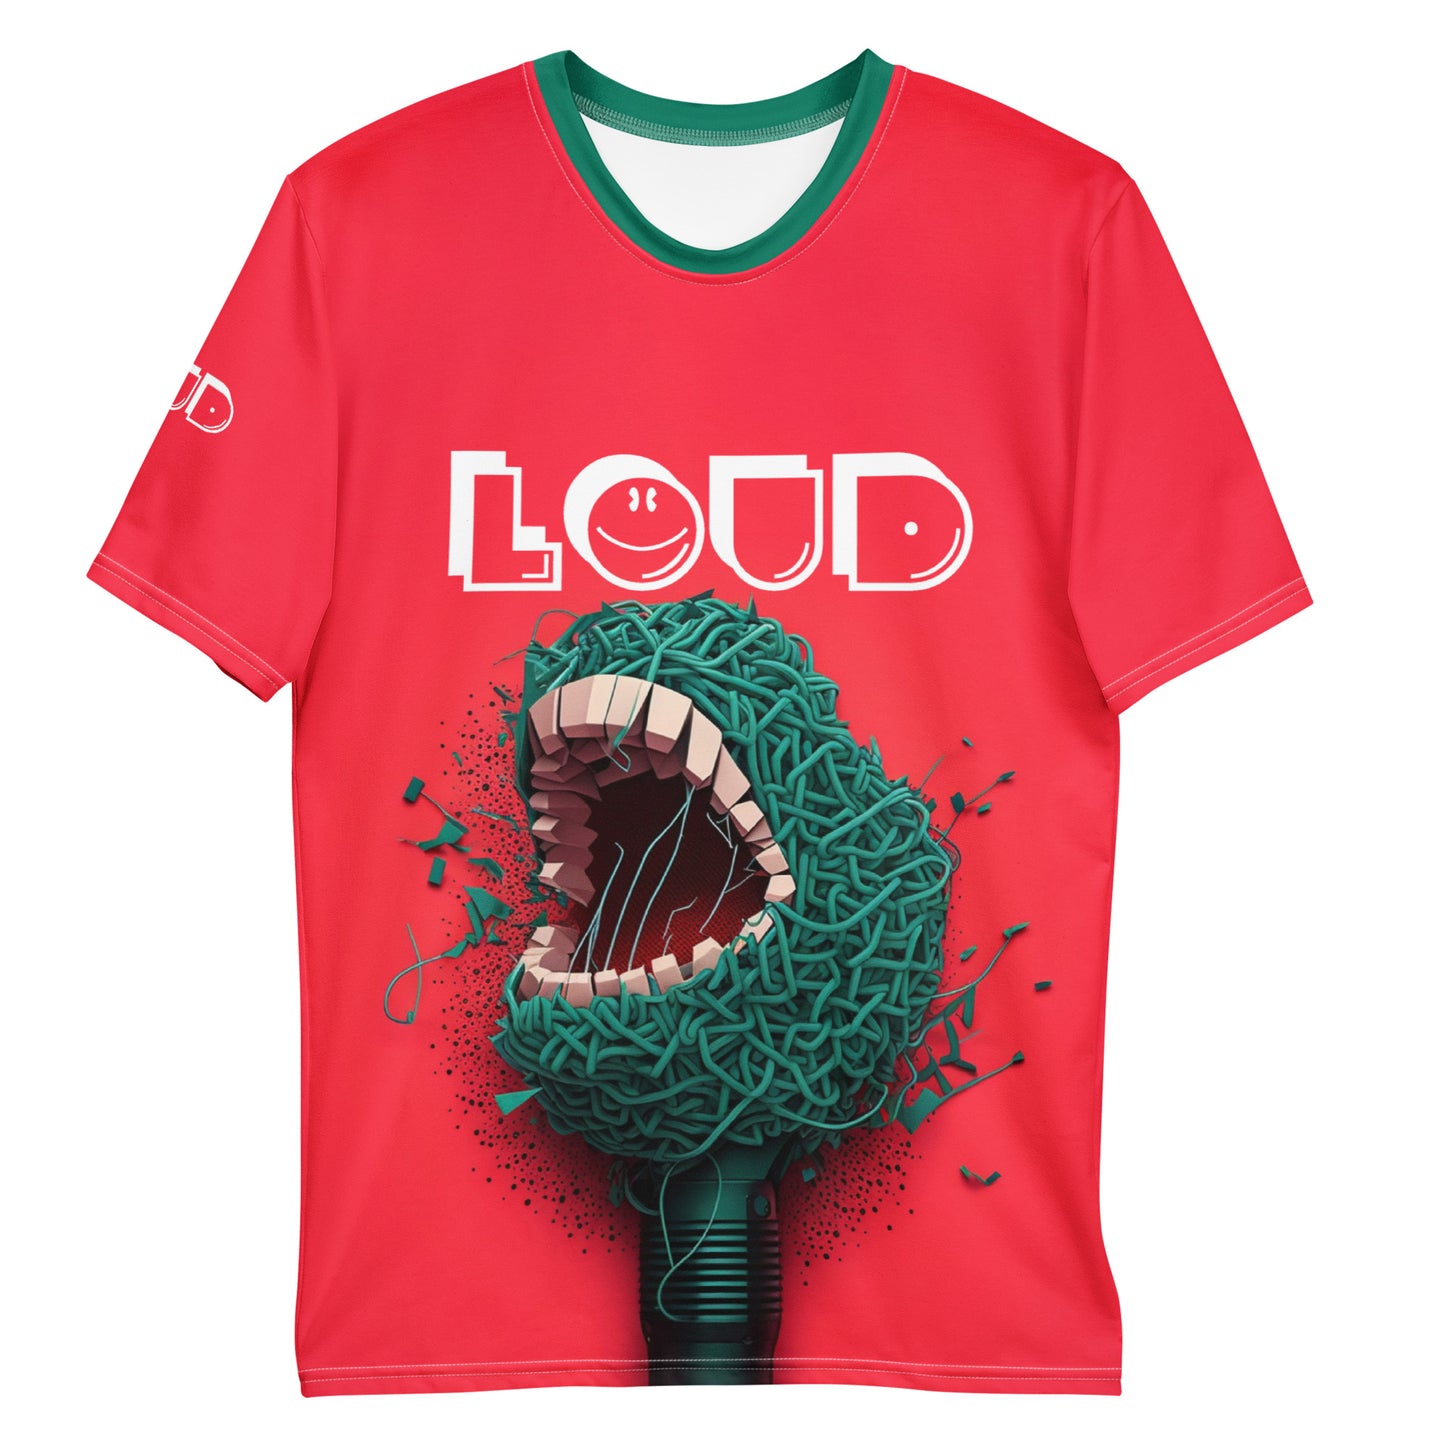 LOUD - Men's t-shirt